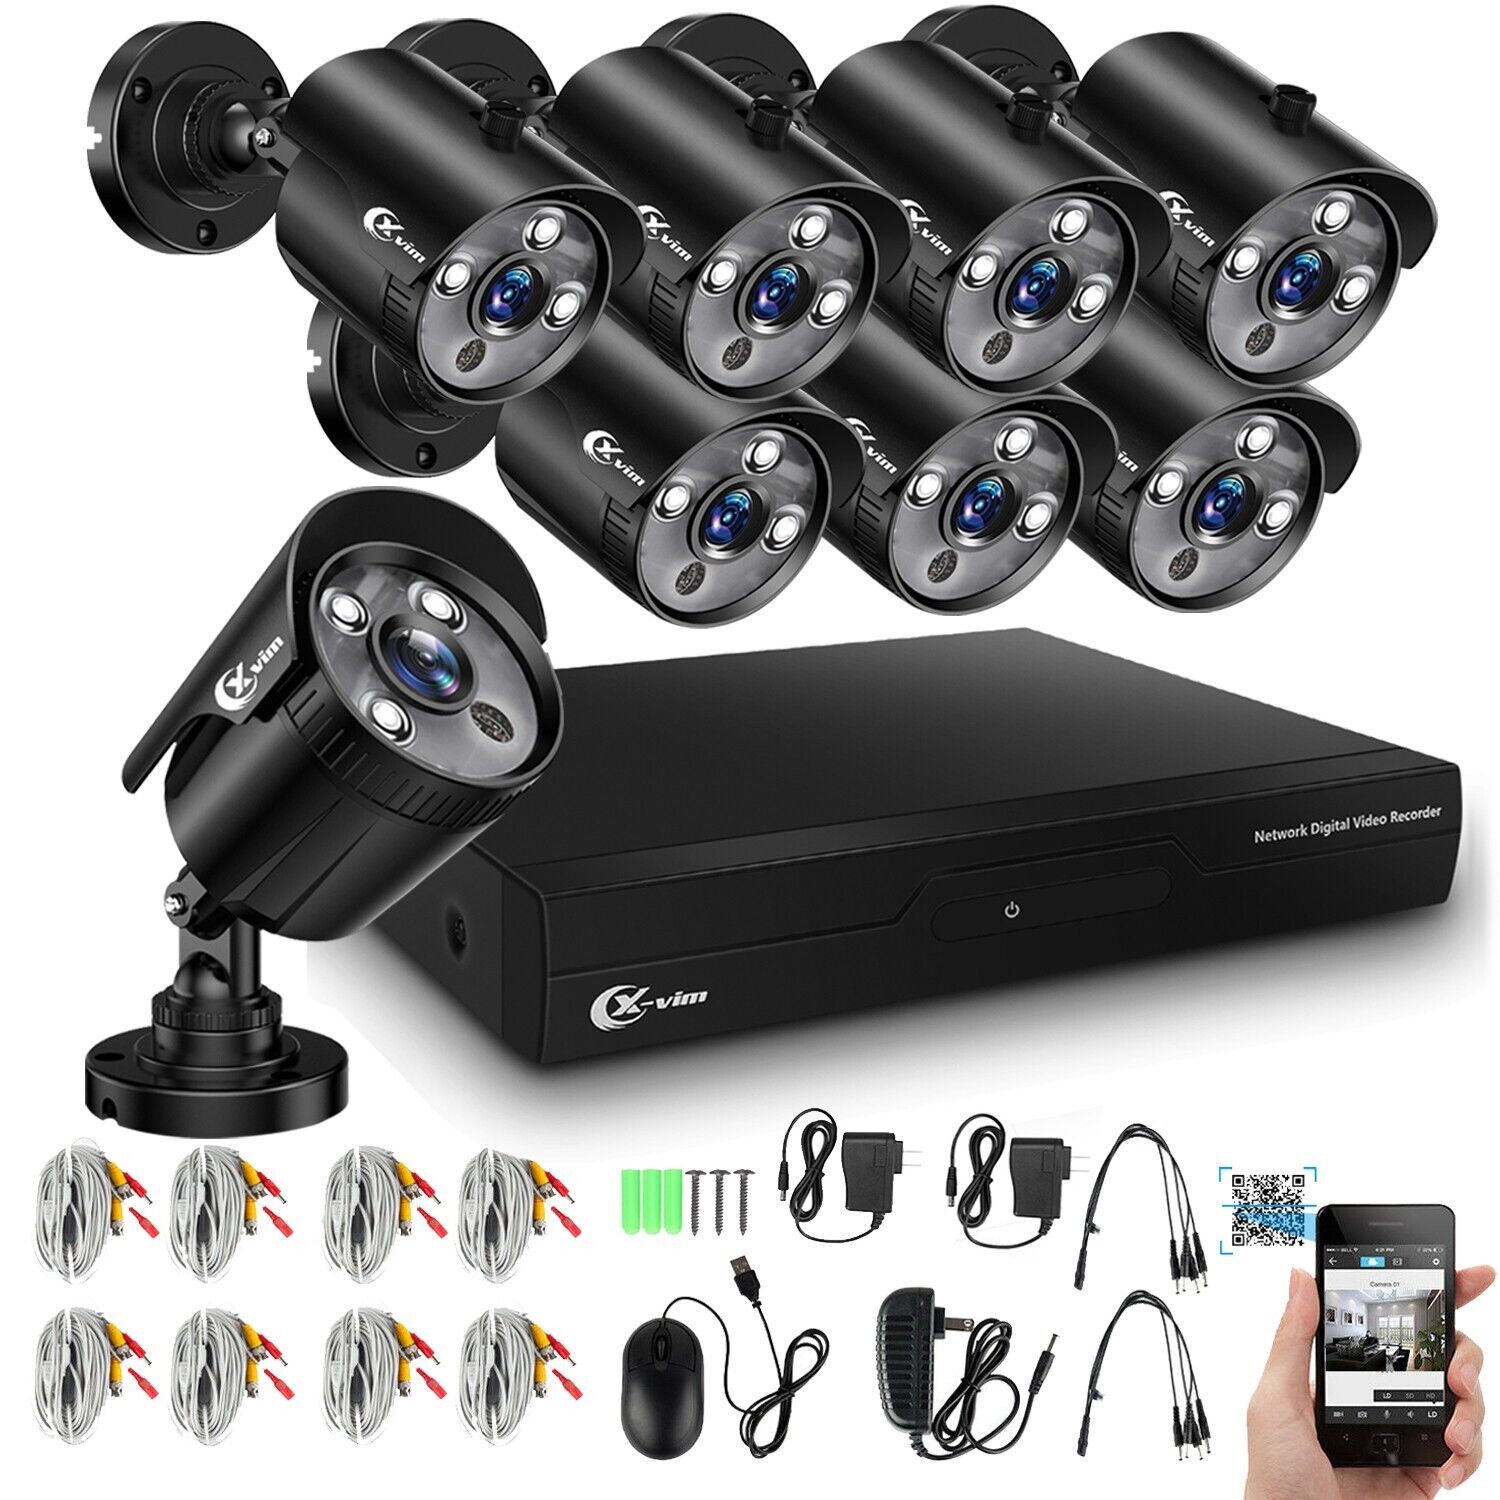 XVIM 8CH 1080P HD DVR Outdoor Night Vision 1920TVL CCTV Security Camera System